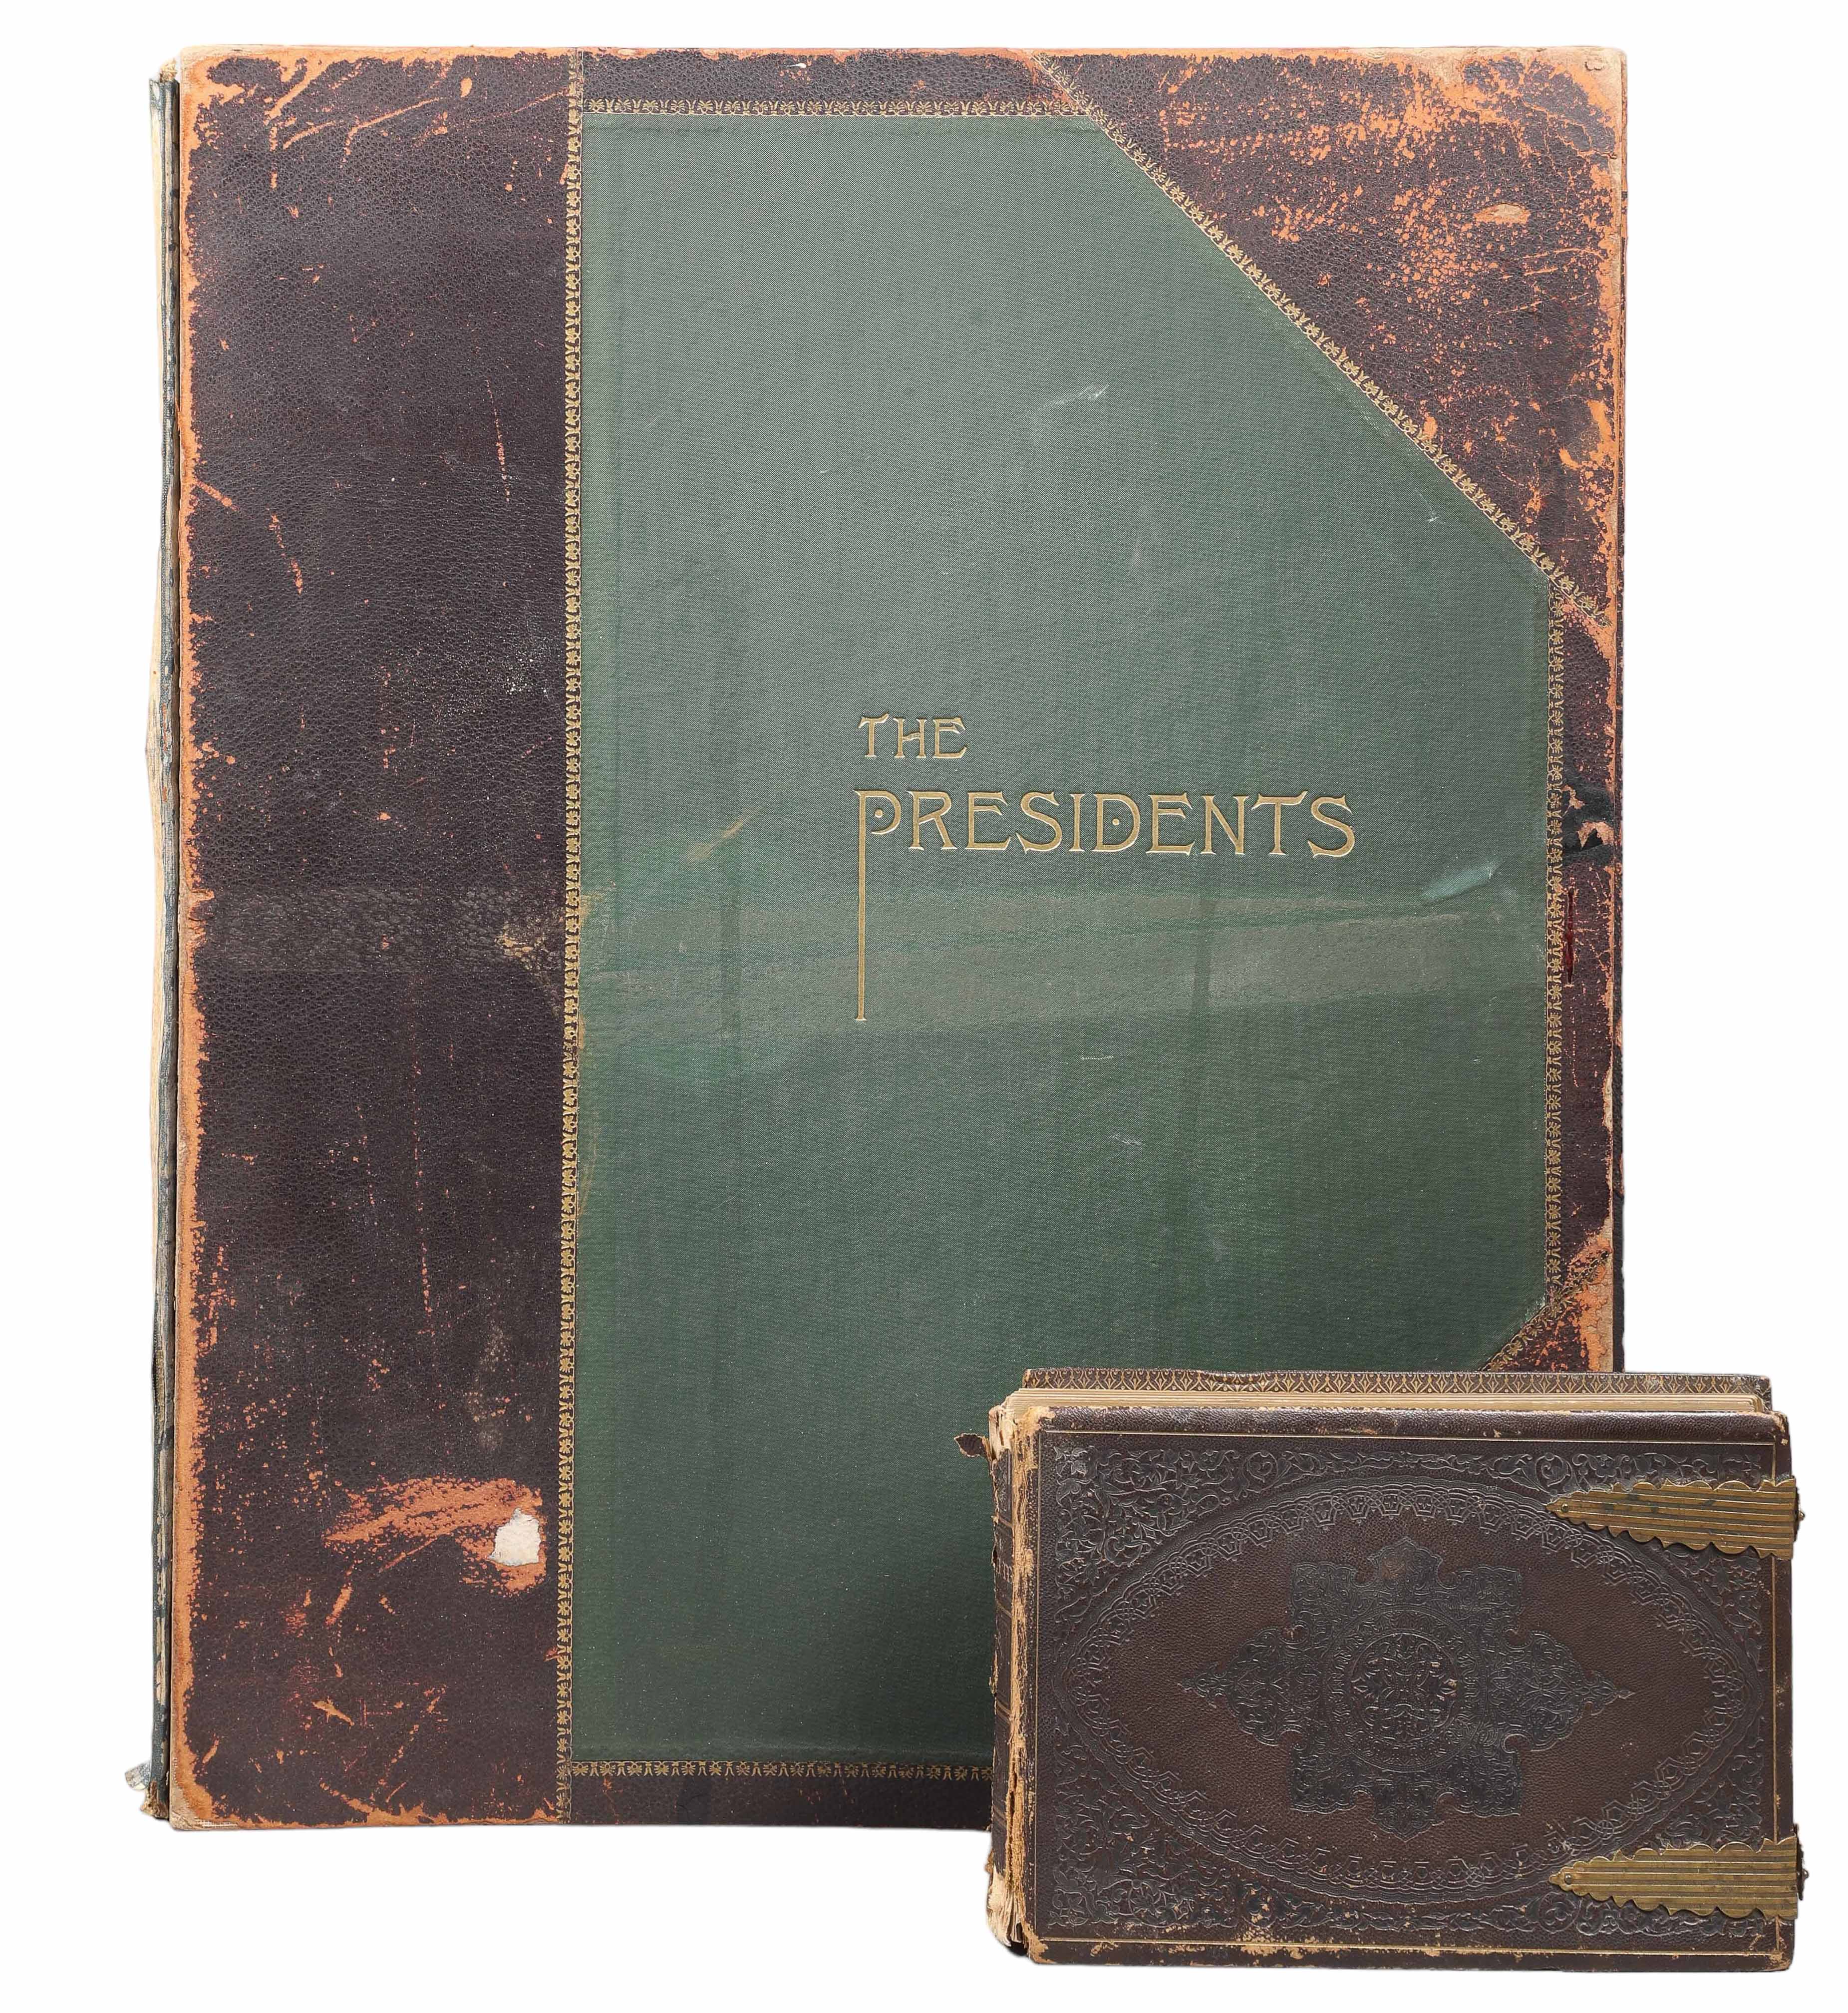 The Presidents book and photo album 2e1b15